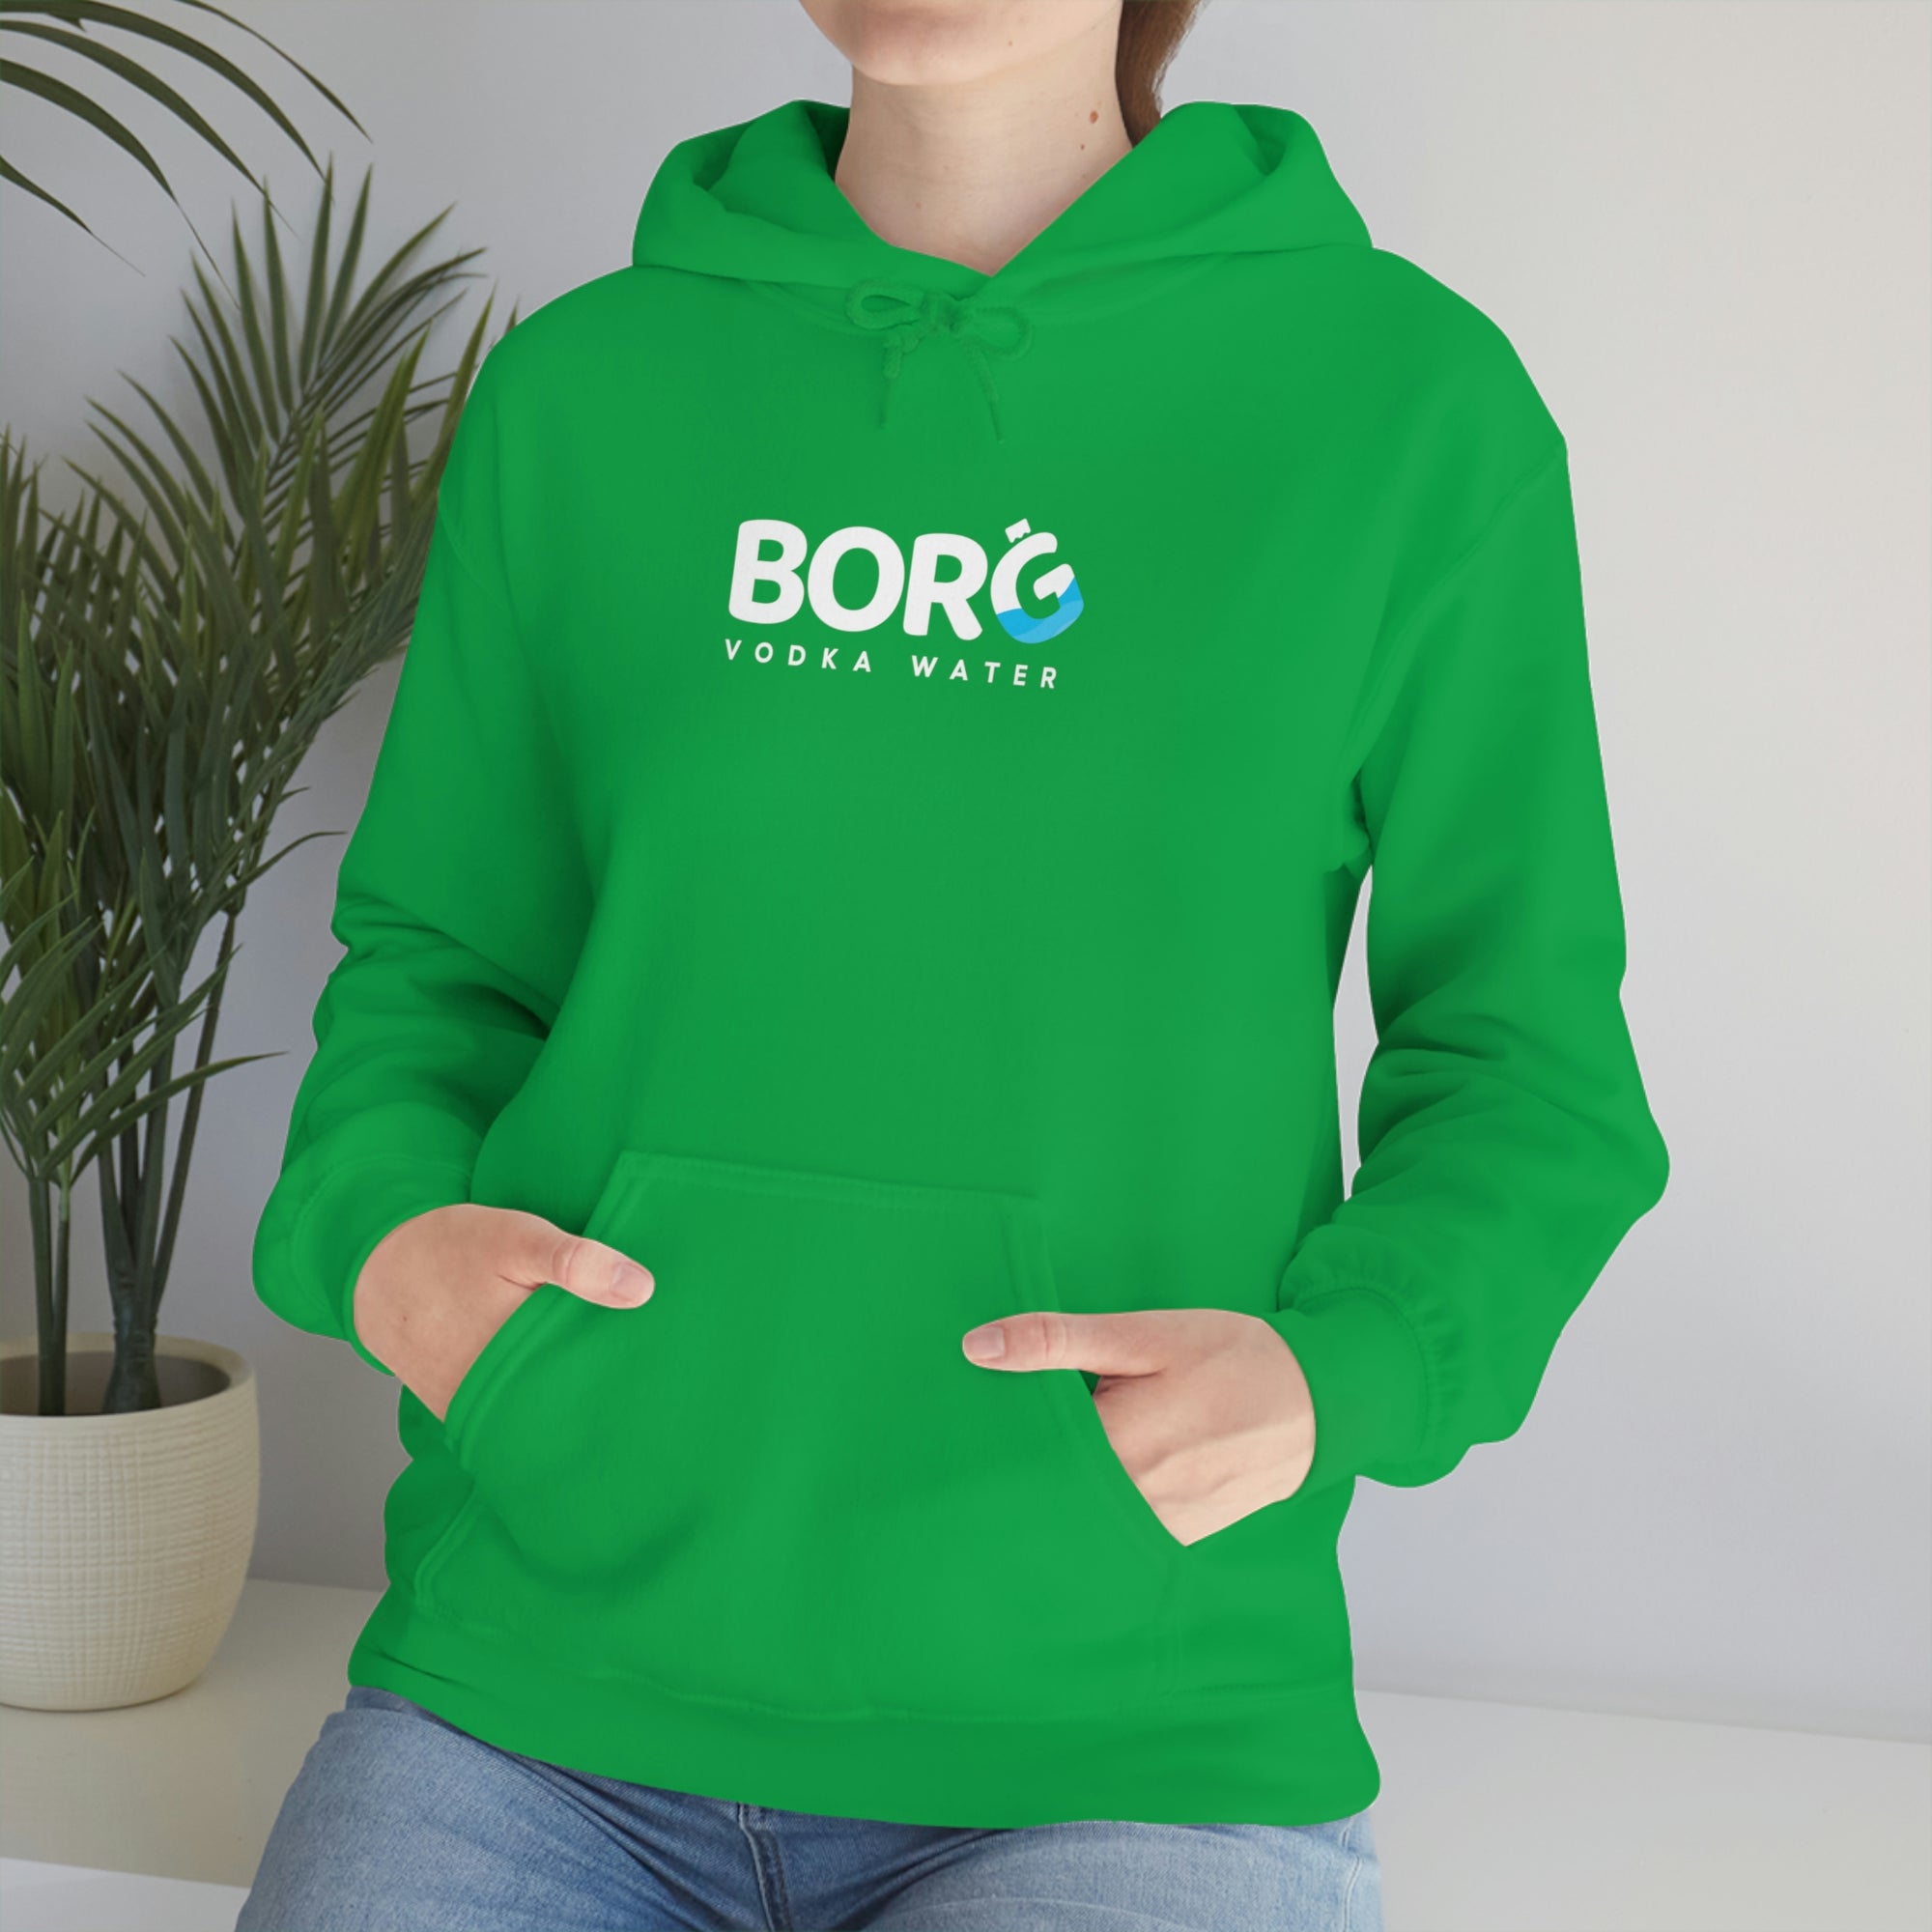 Up close photo of the green Borg hooded sweatshirt